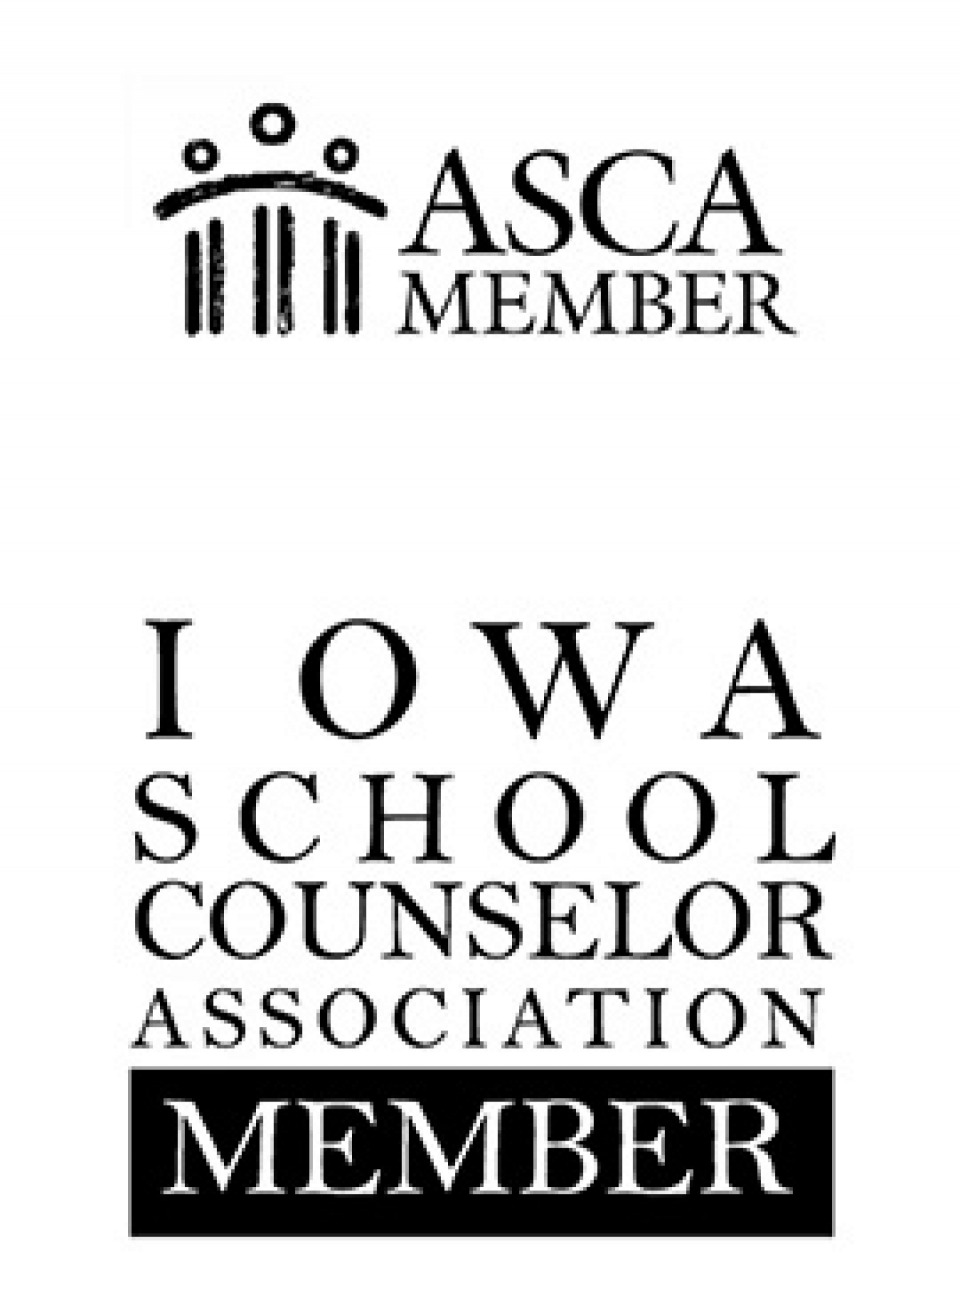 ASCA and Iowa School Counselor Association Member logos